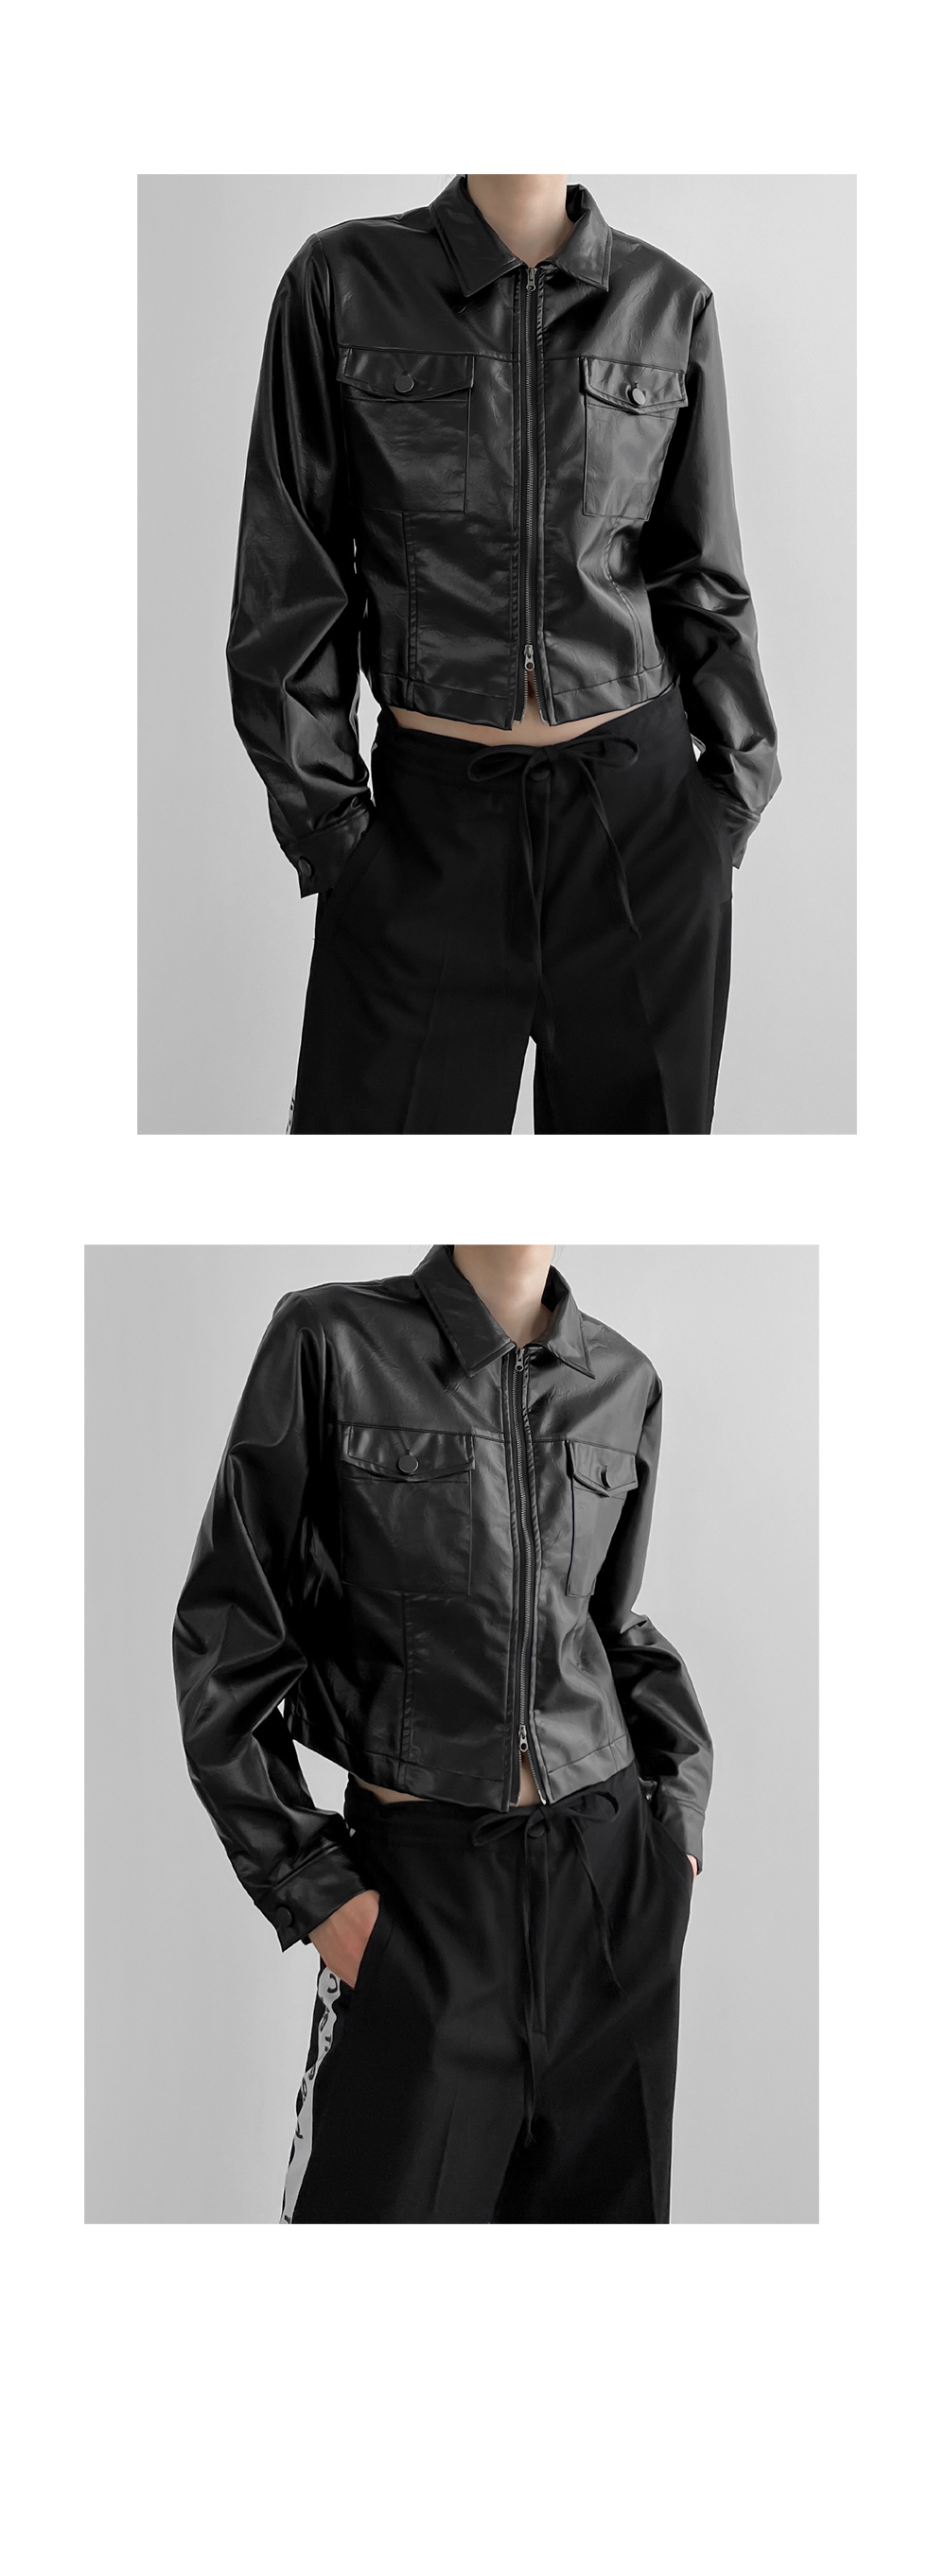 Down jacket model image-S1L8